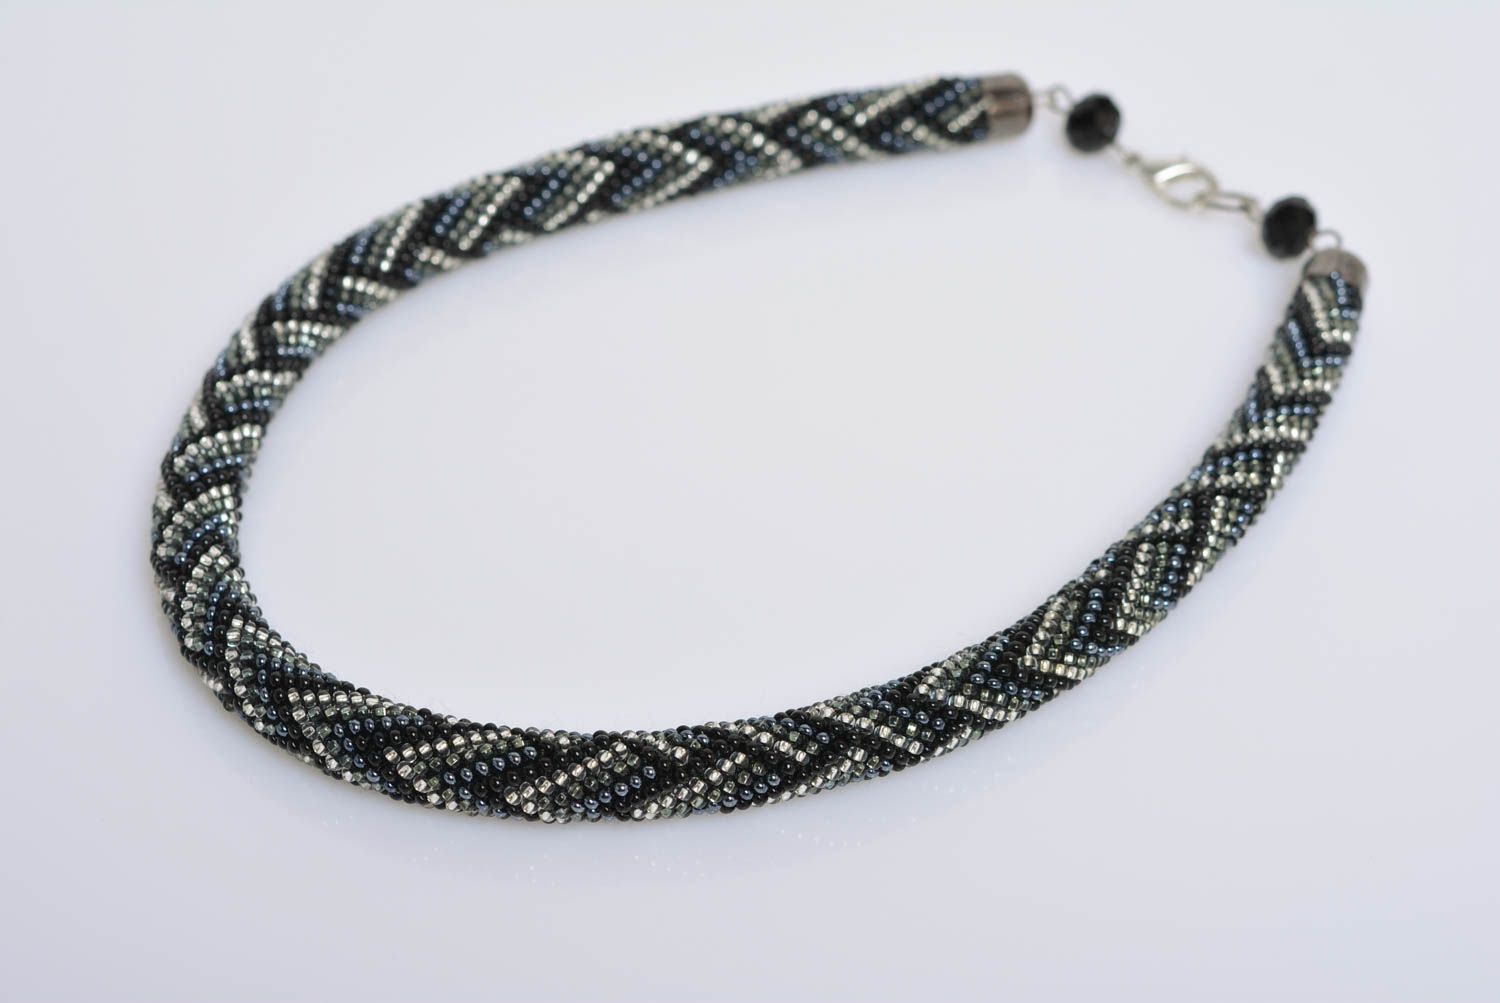 Handmade designer bead woven cord necklace with laconic dark geometric ornament photo 1